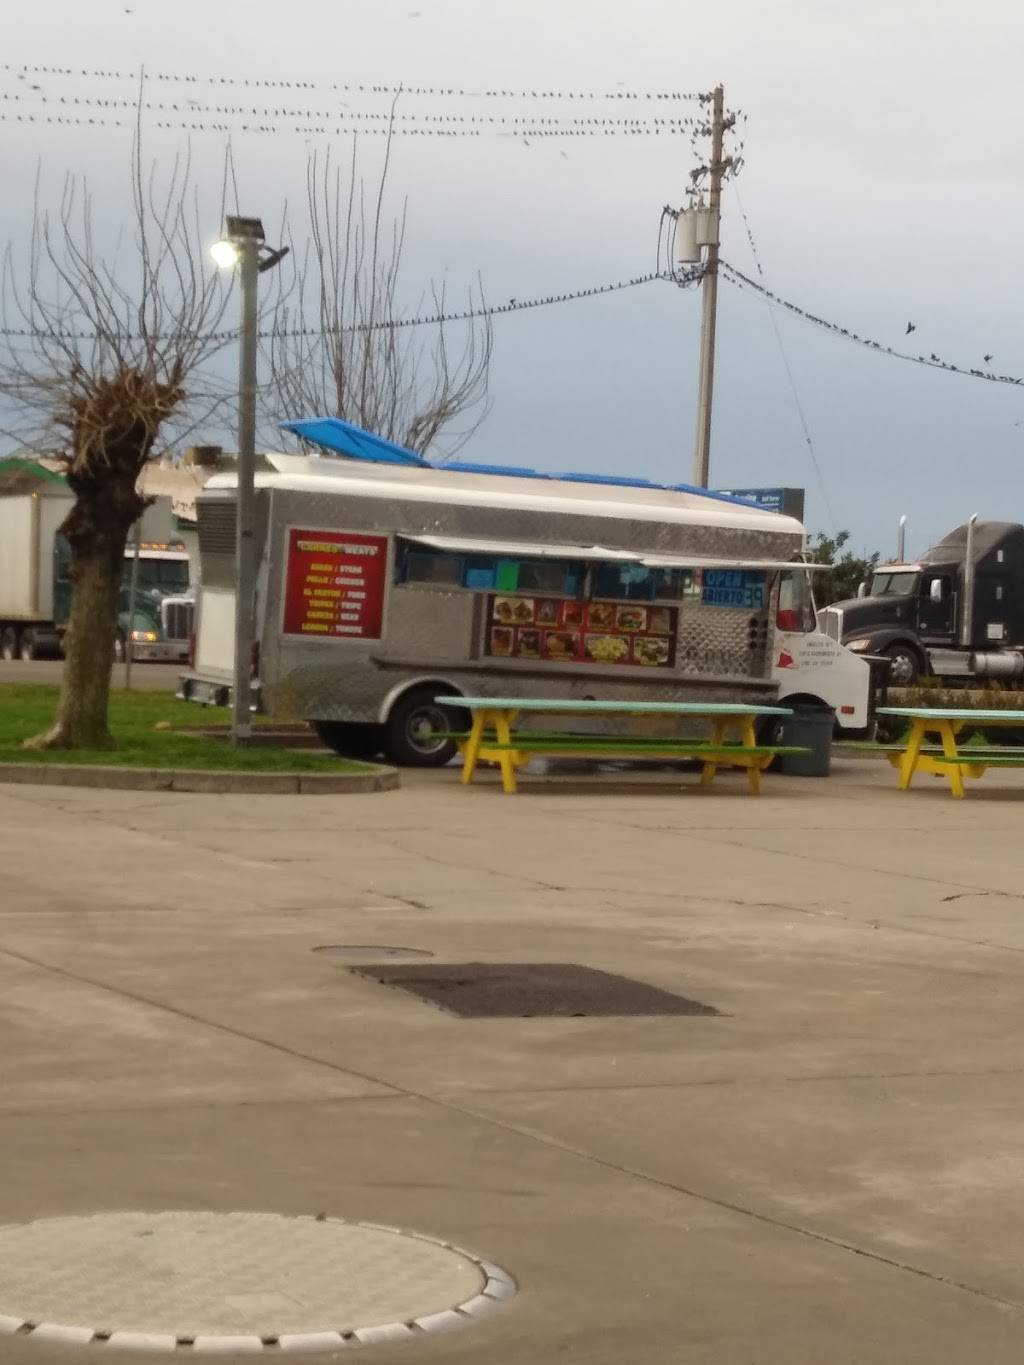 Angeles #1 Taco Truck | 14958 Thornton Rd, Lodi, CA 95242, USA | Phone: (209) 456-2749